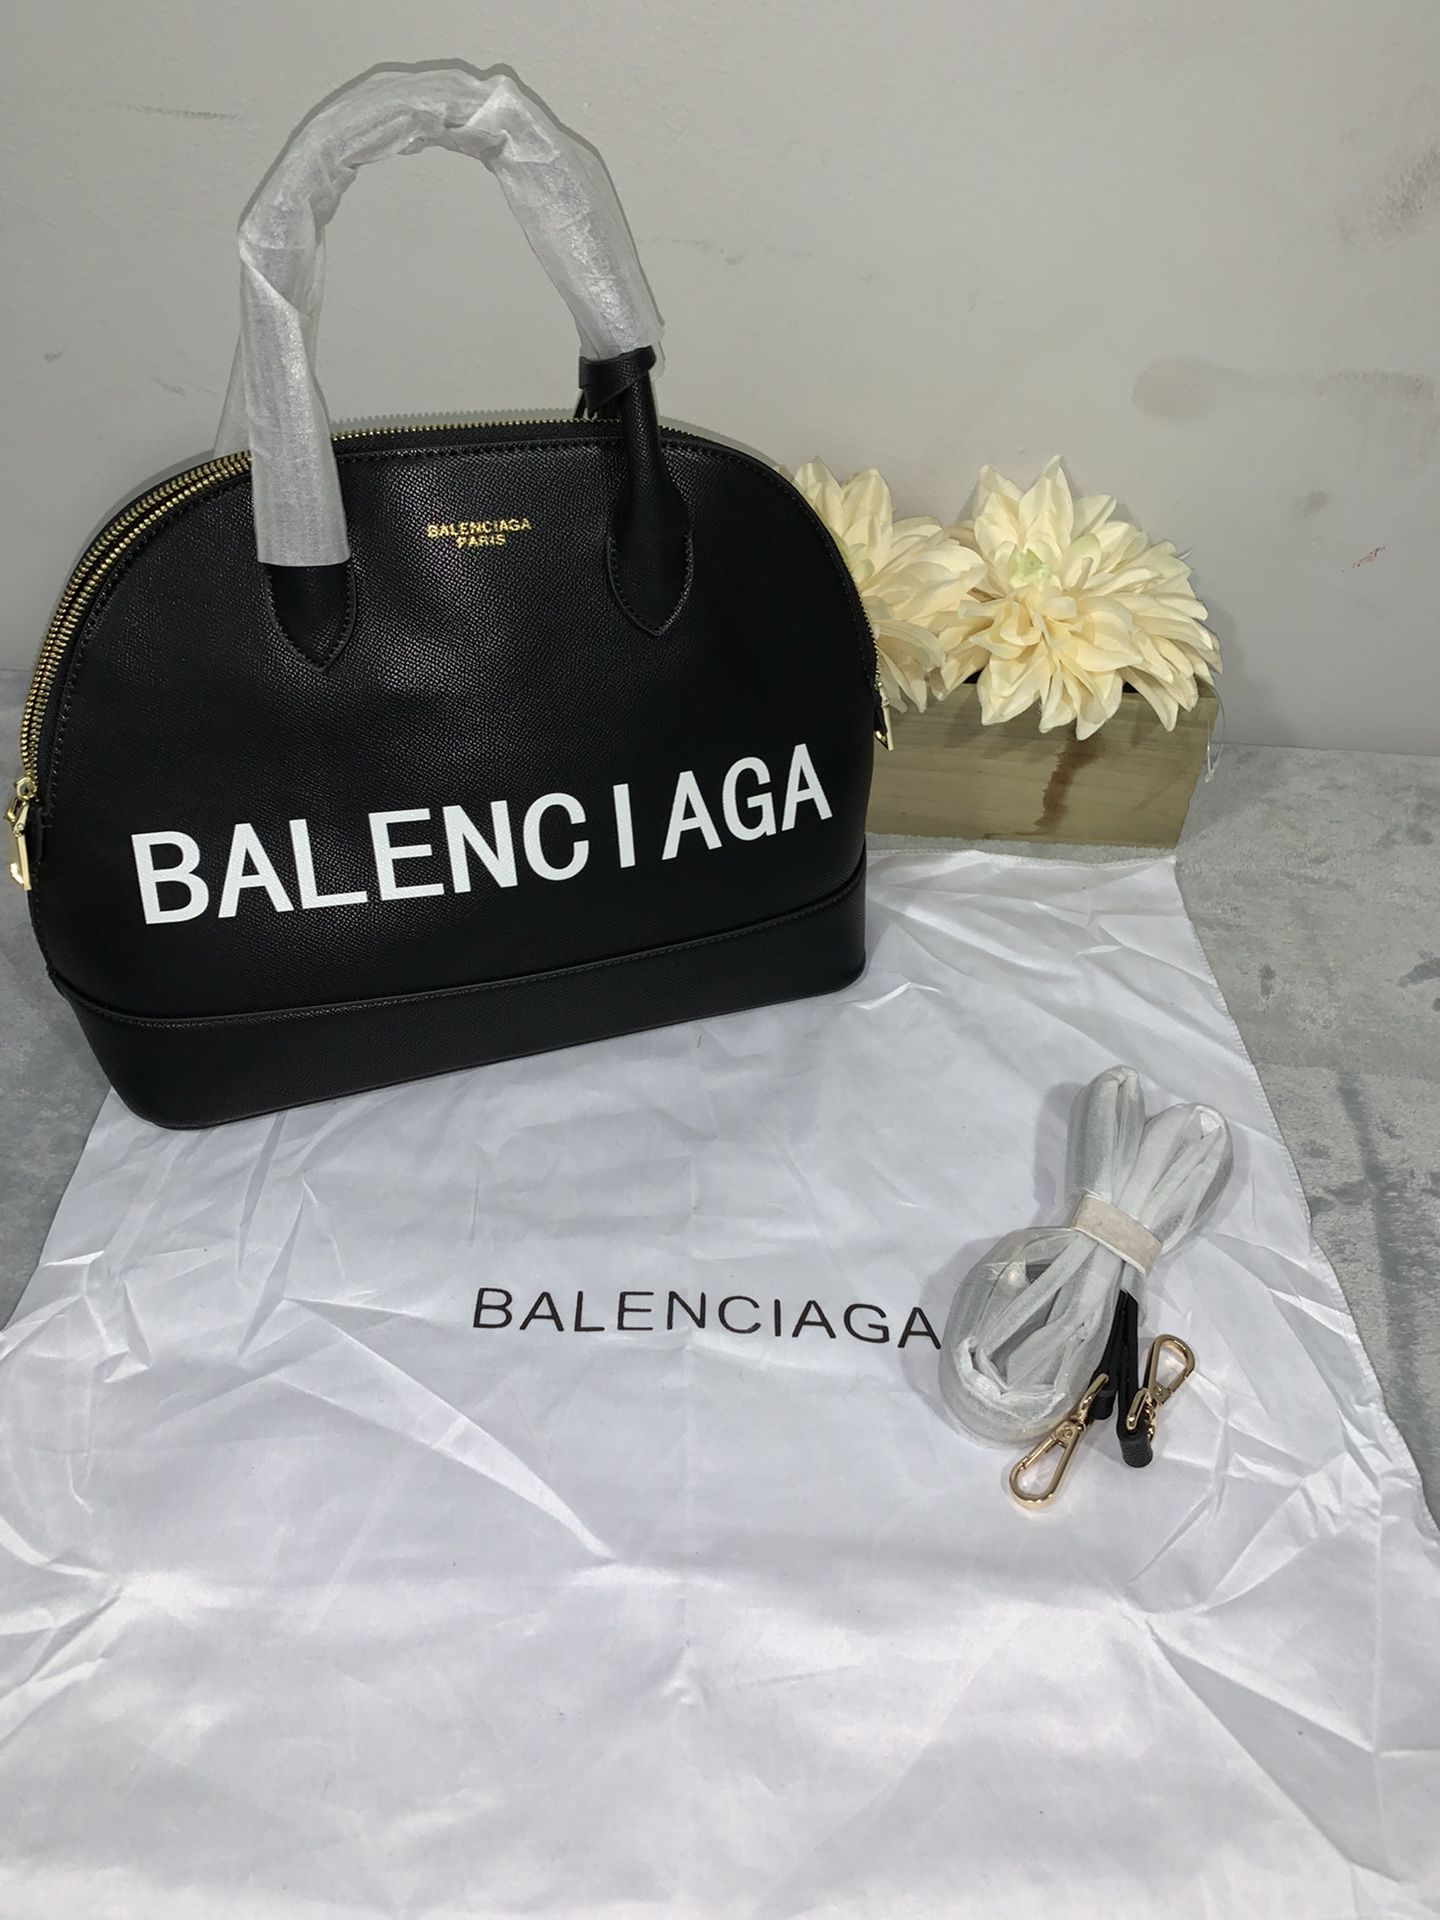 Balenciaga Purse for Sale Federal Way, WA - OfferUp